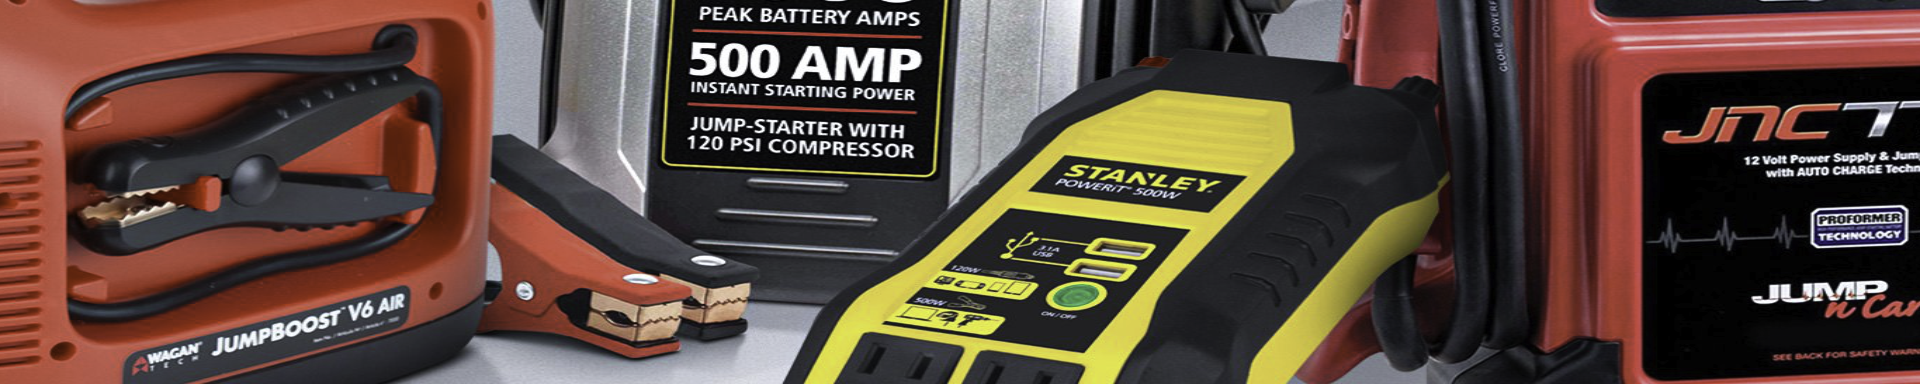 Battery Chargers & Jump Starters | GarageAndFab.com | Munro Industries gf-1001030206